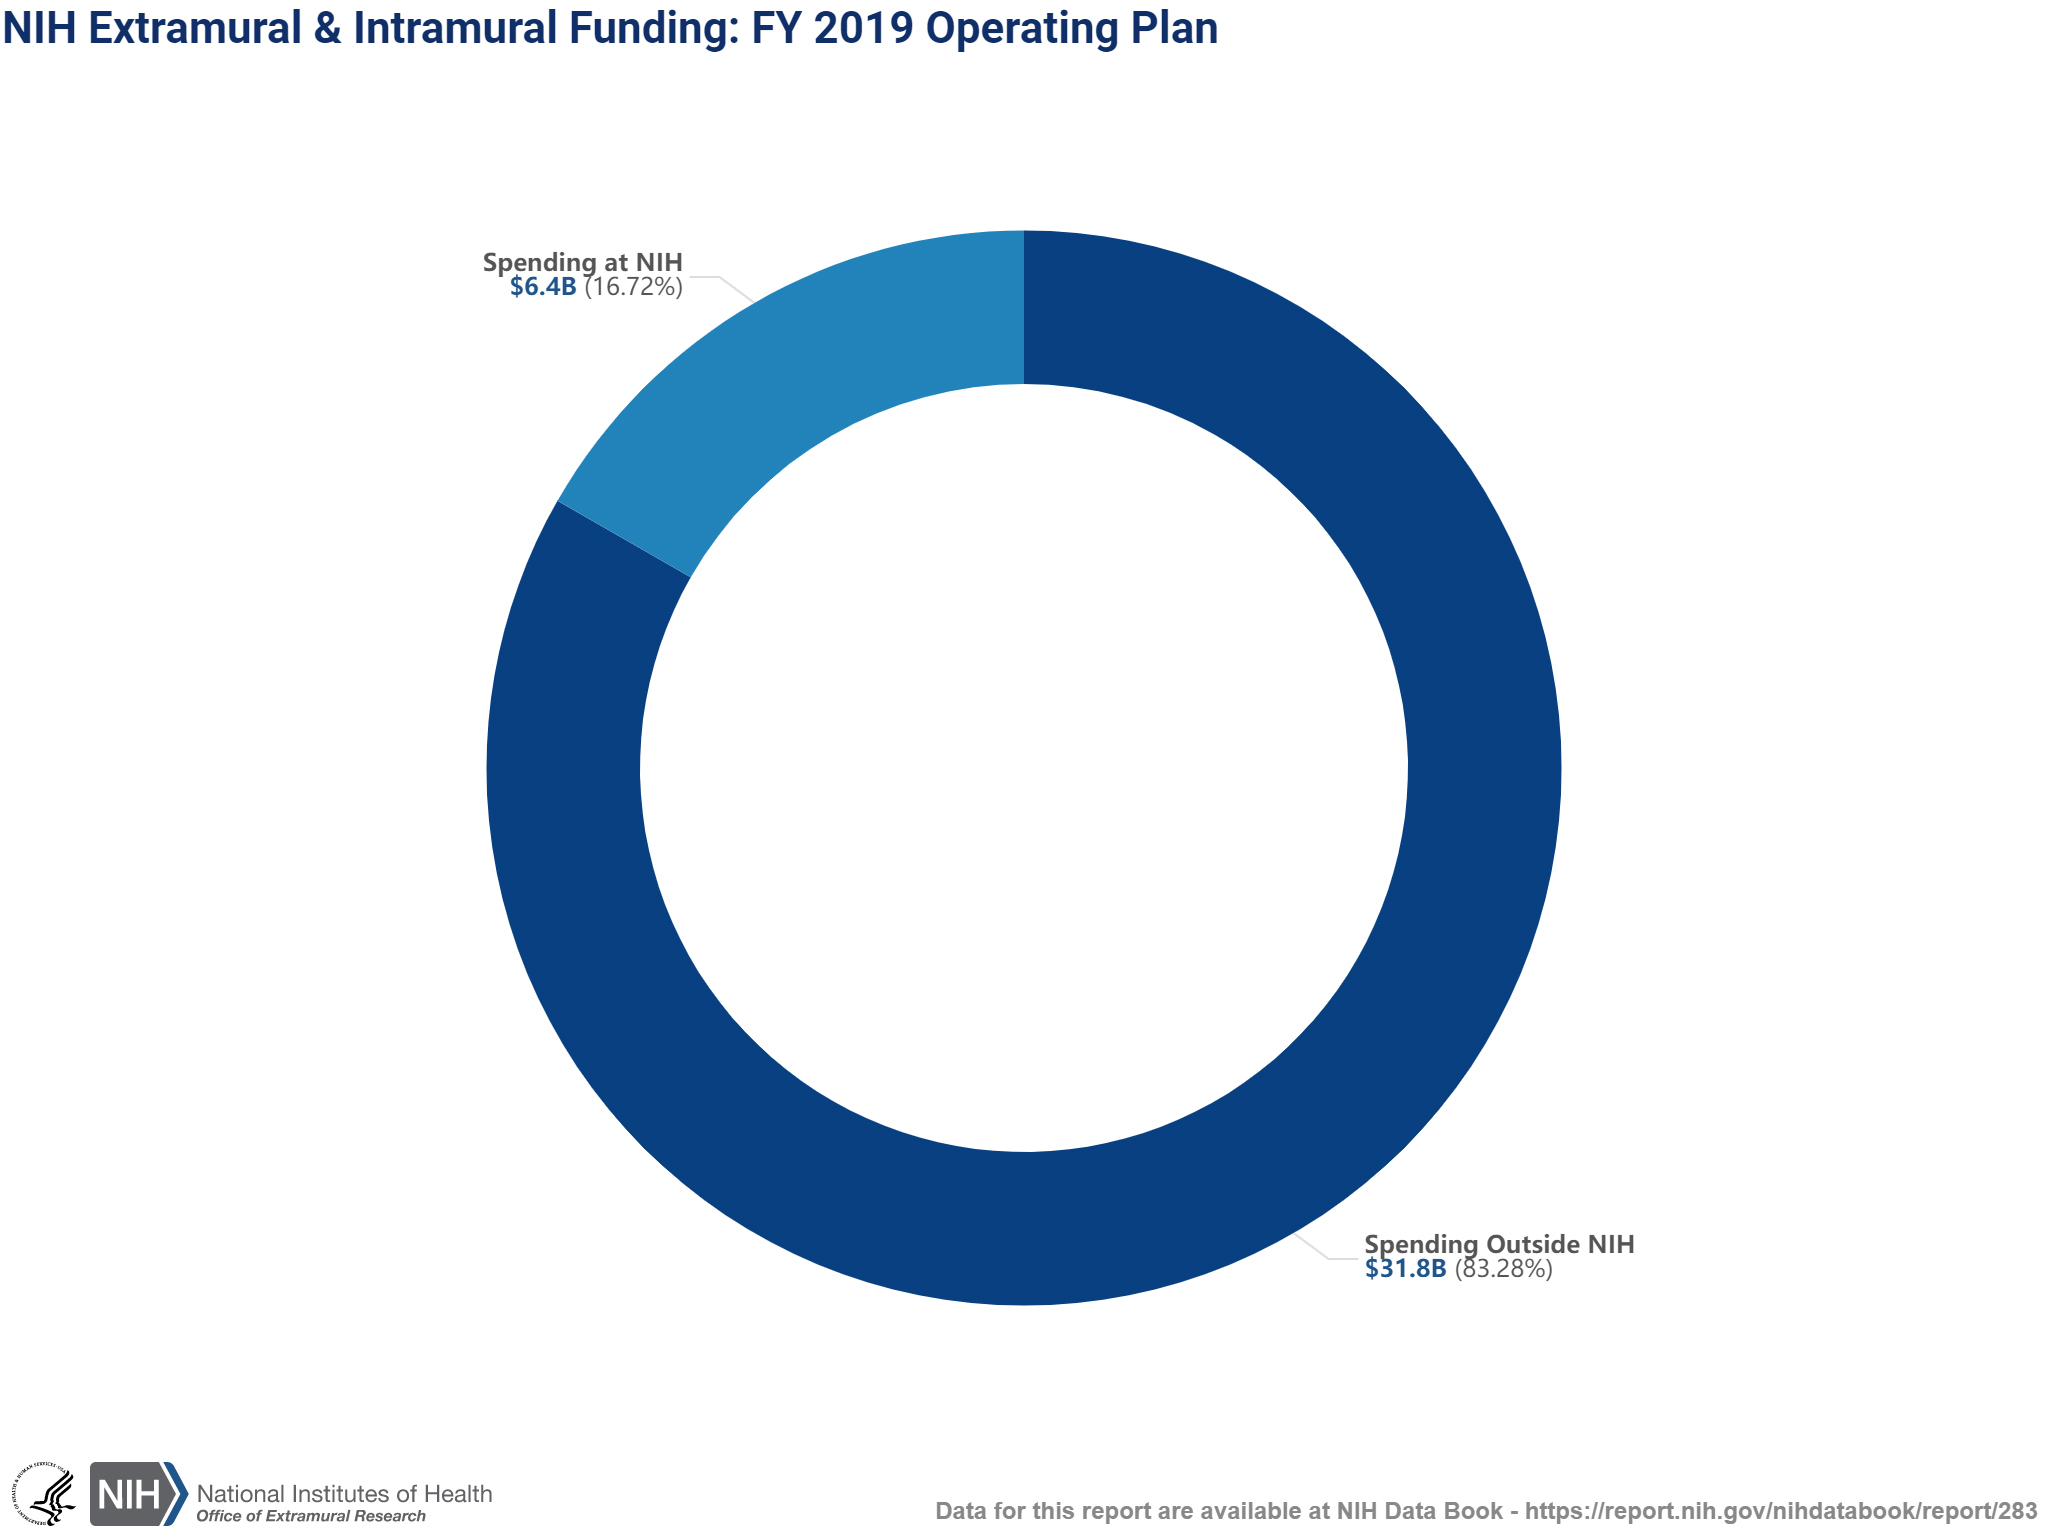 Percentage of NIH’s FY 2019 budget for extramural research funding versus spending at NIH.